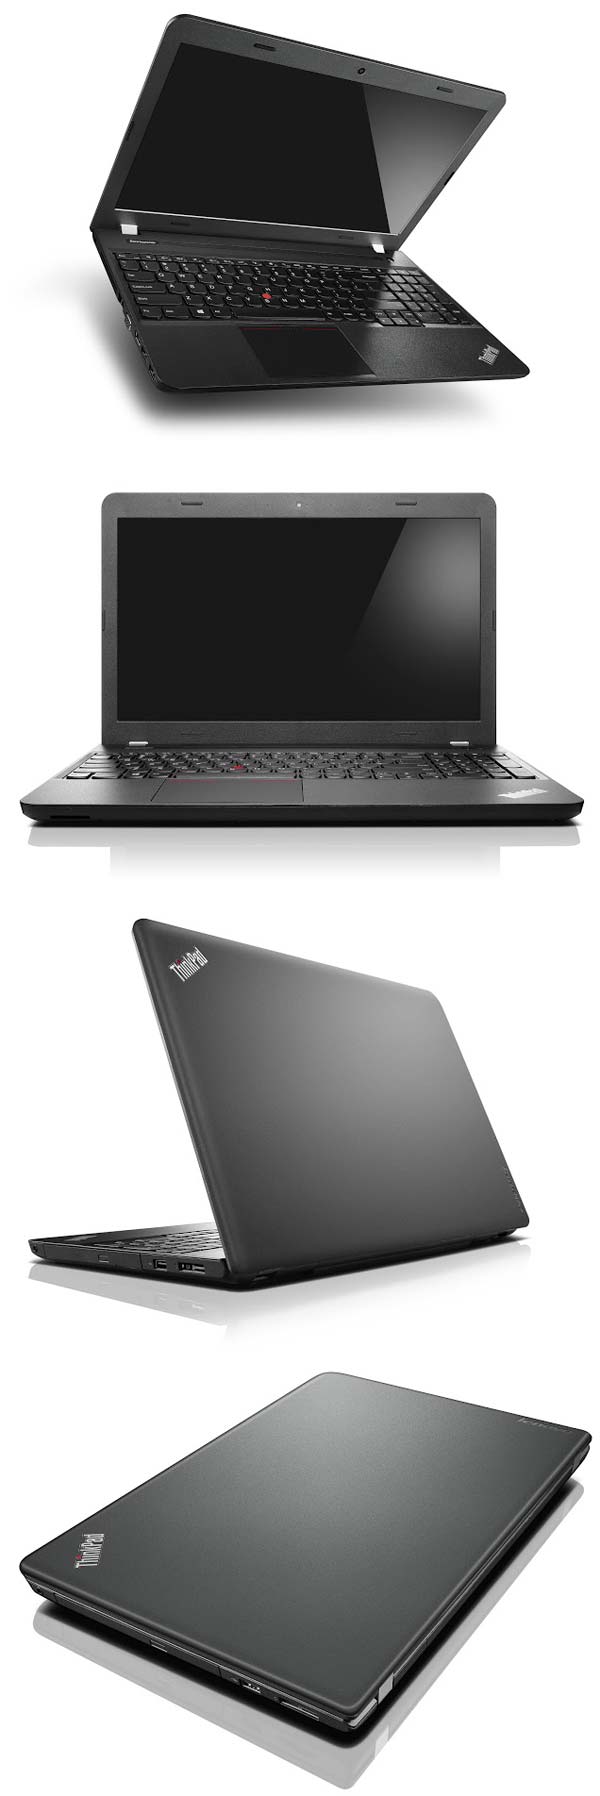 На фото показан лэптоп Lenovo ThinkPad E555